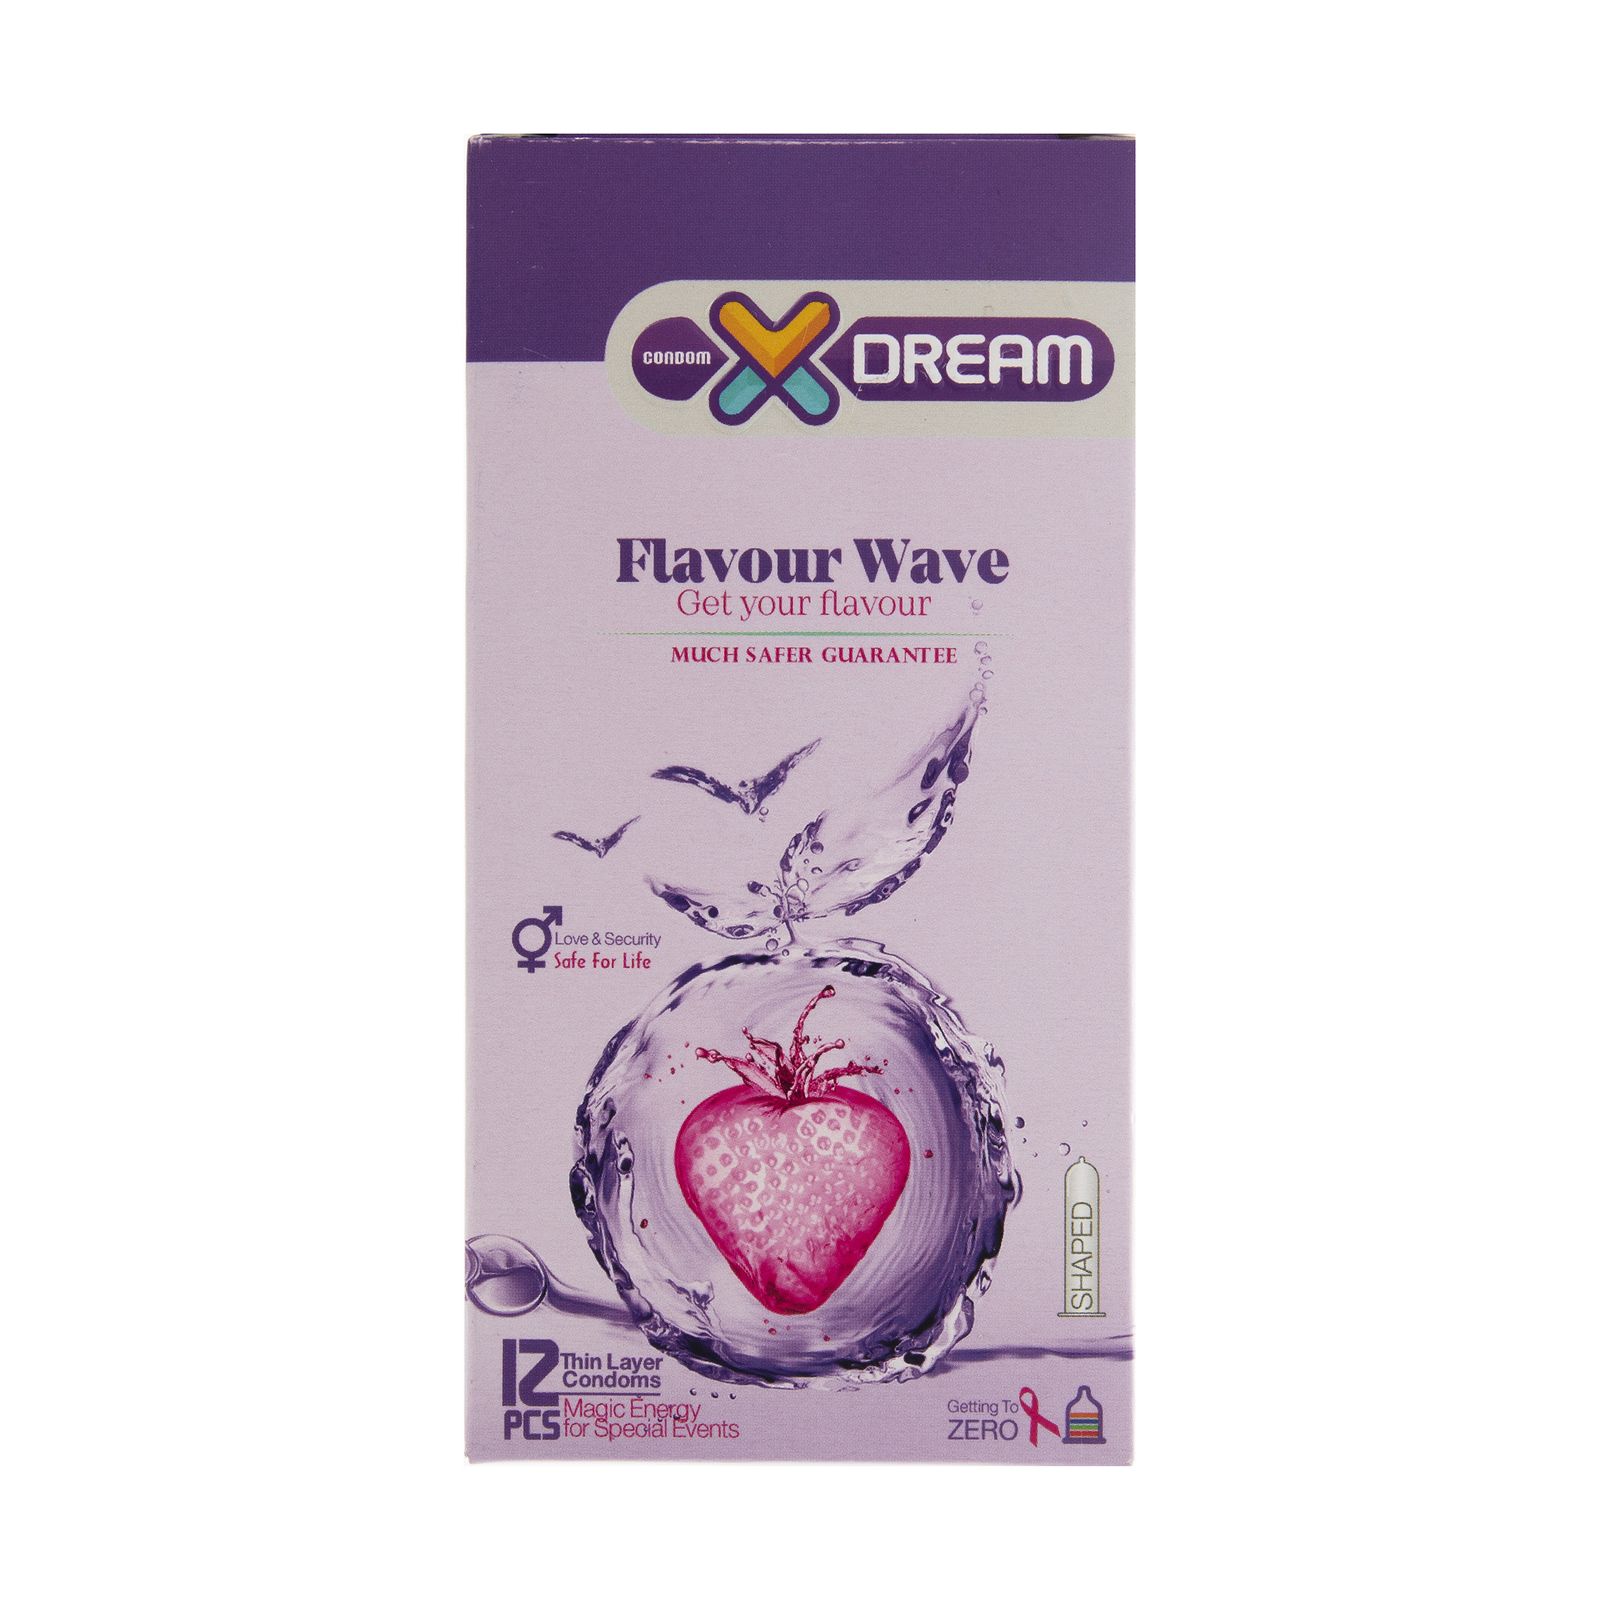 کاندوم ایکس دریم مدل Flavour Wave بسته 12 عددی -  - 1